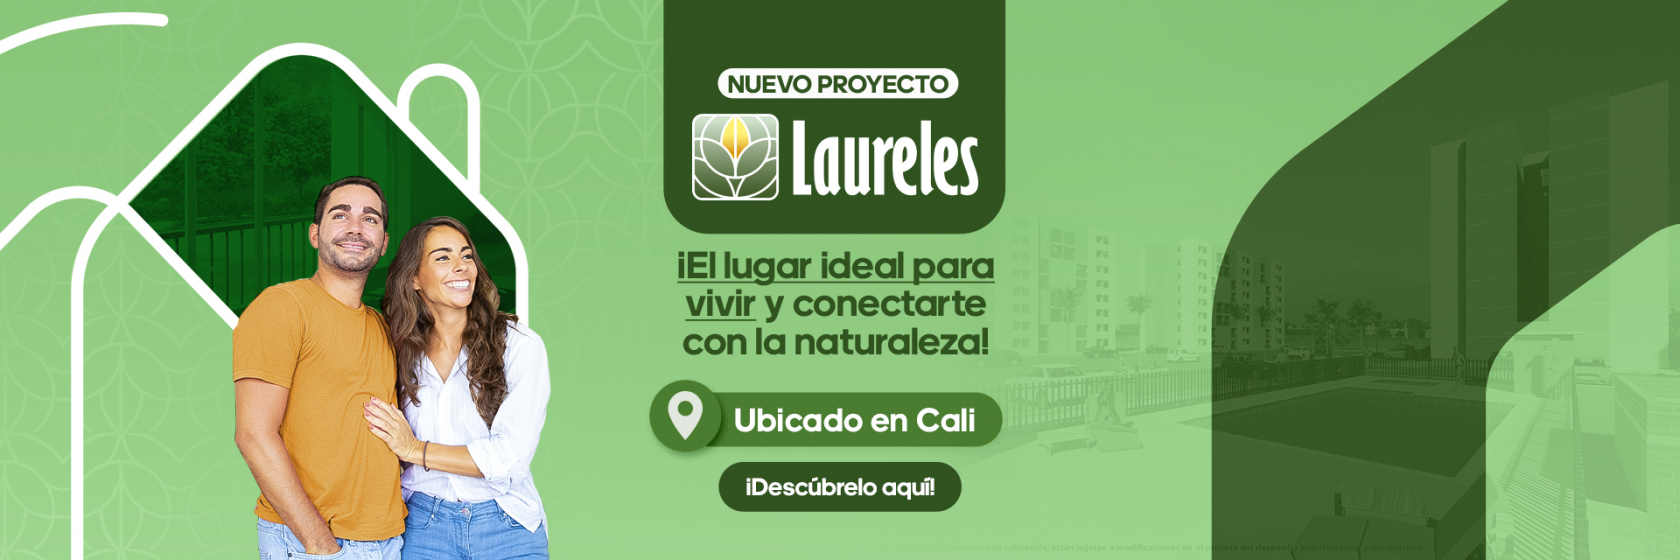 Campaña proyecto Laureles